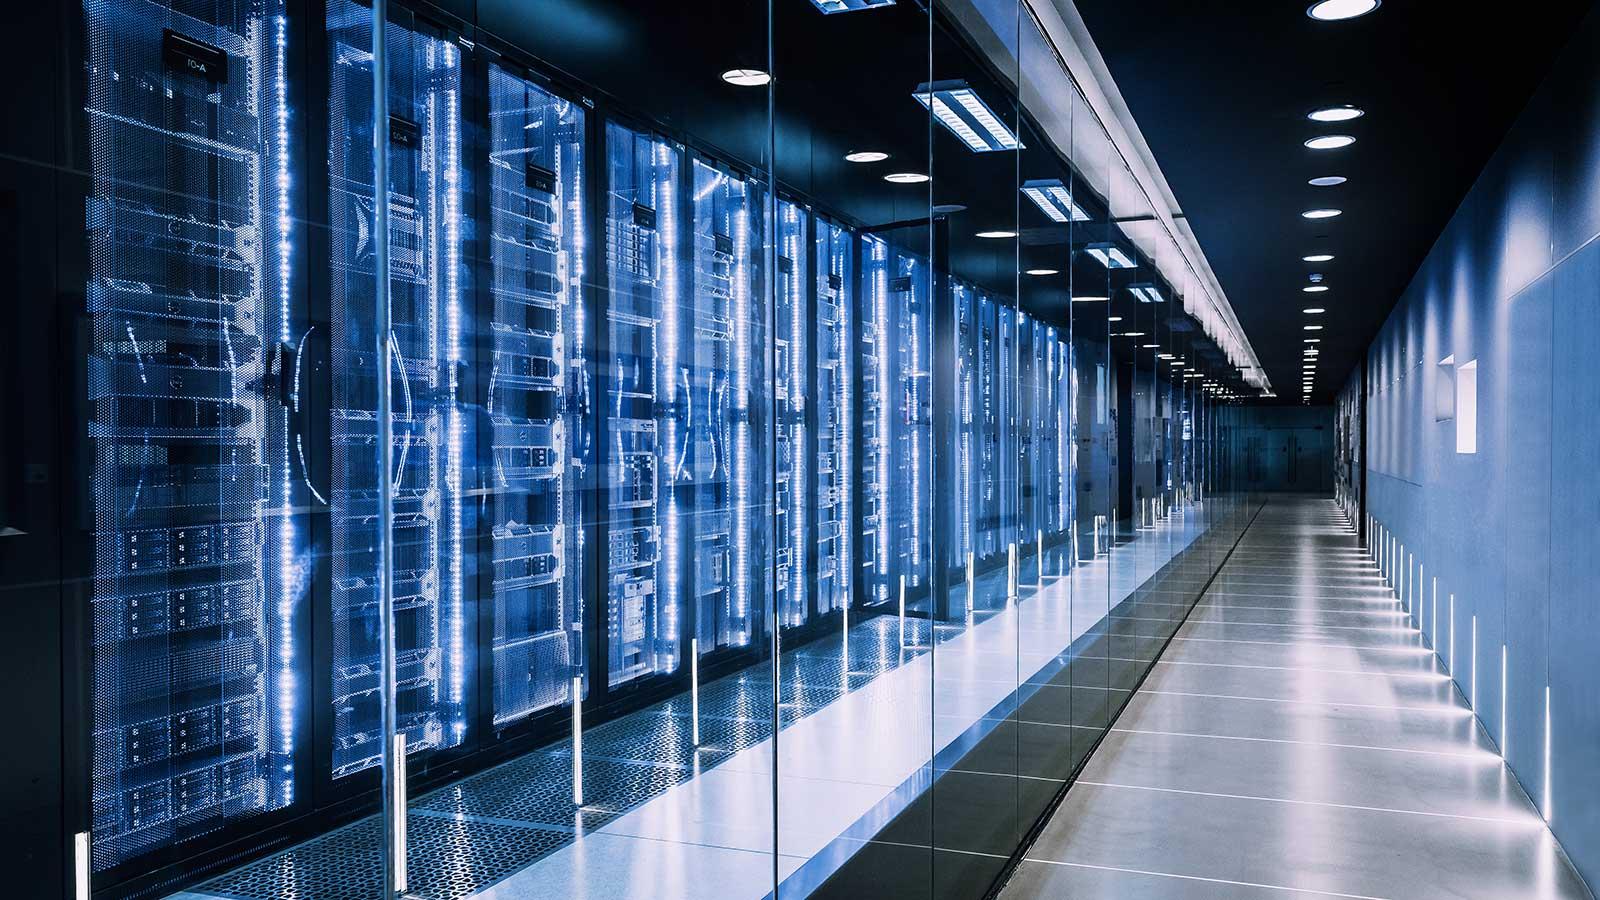 Racks of servers representing Computer Science degrees at esball国际平台客户端